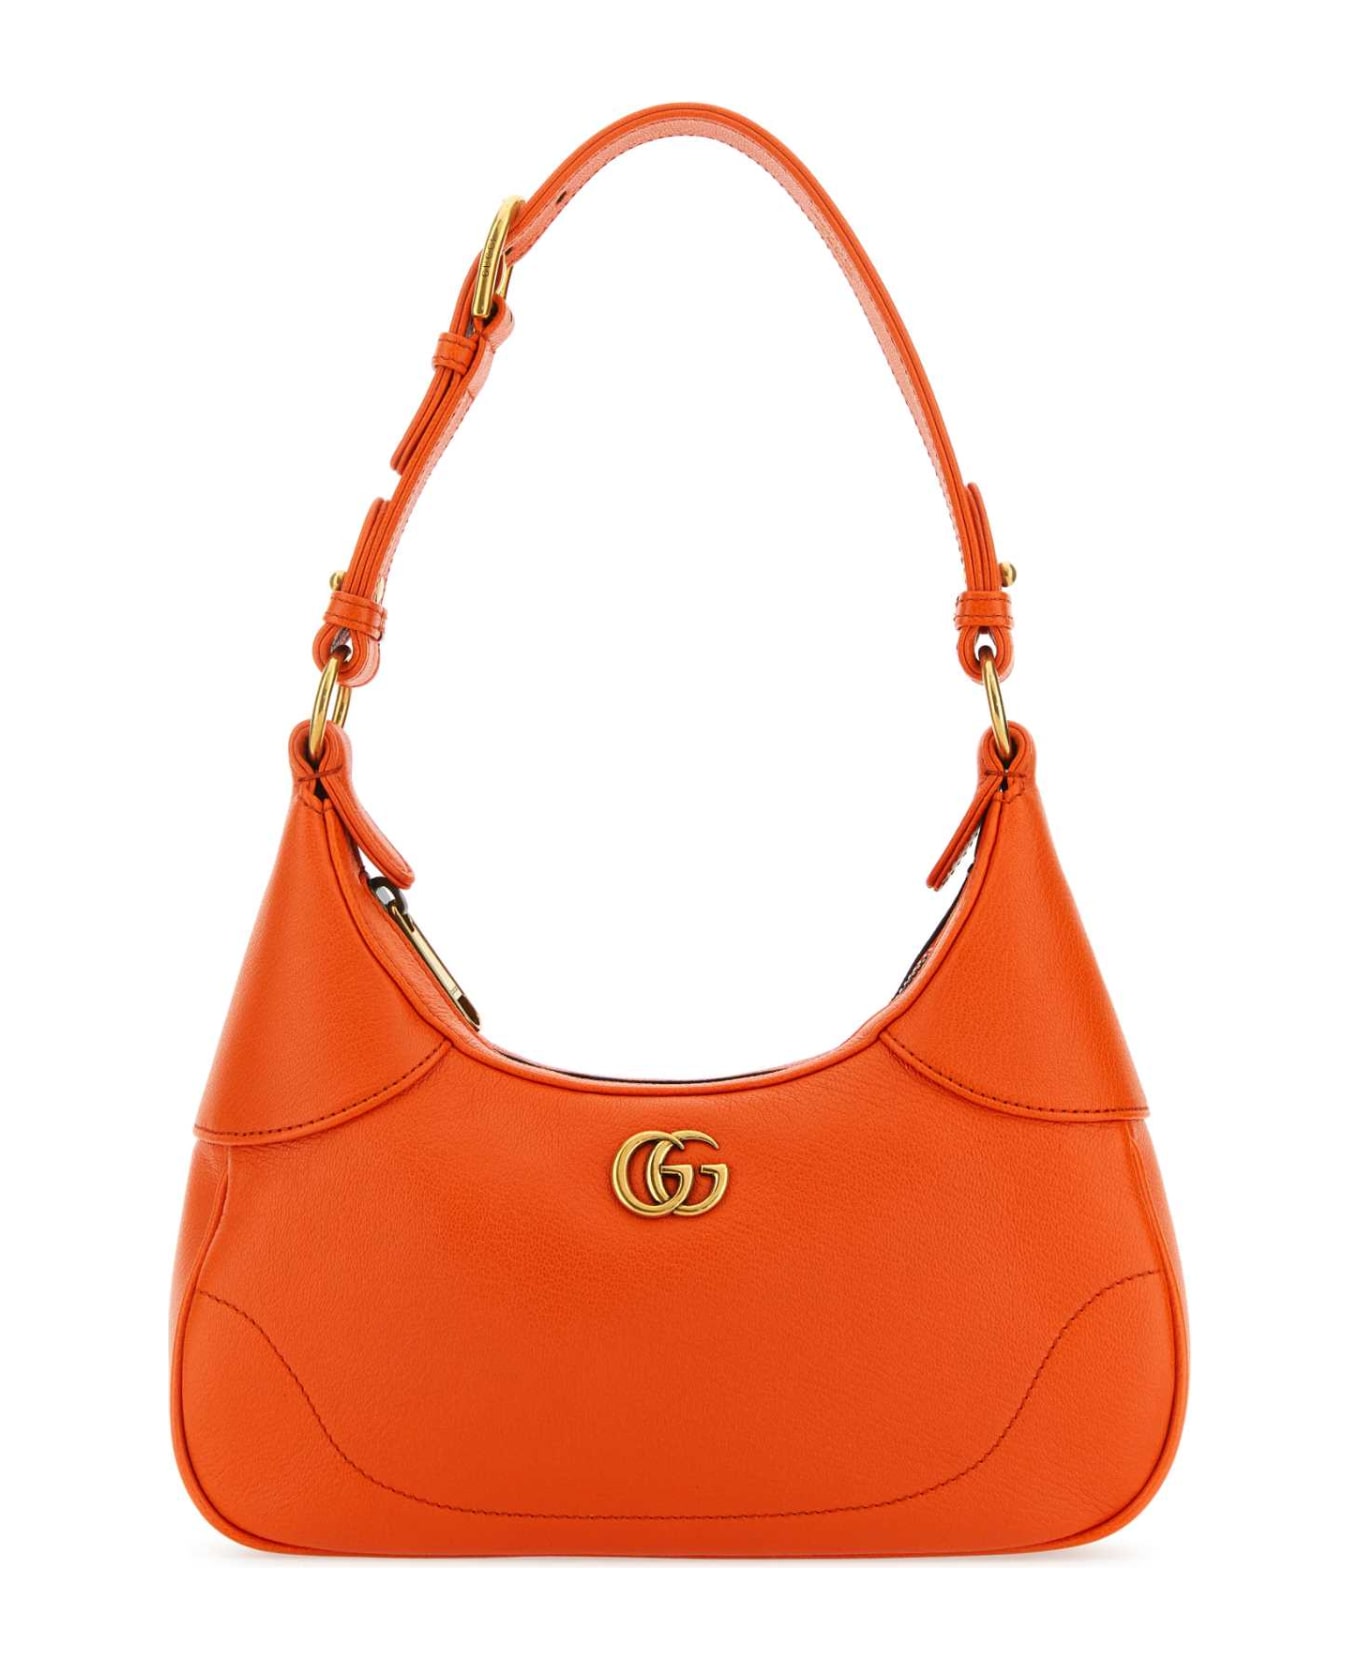 Gucci Orange Leather Small Aphrodite Handbag - DEEPORANGE トートバッグ